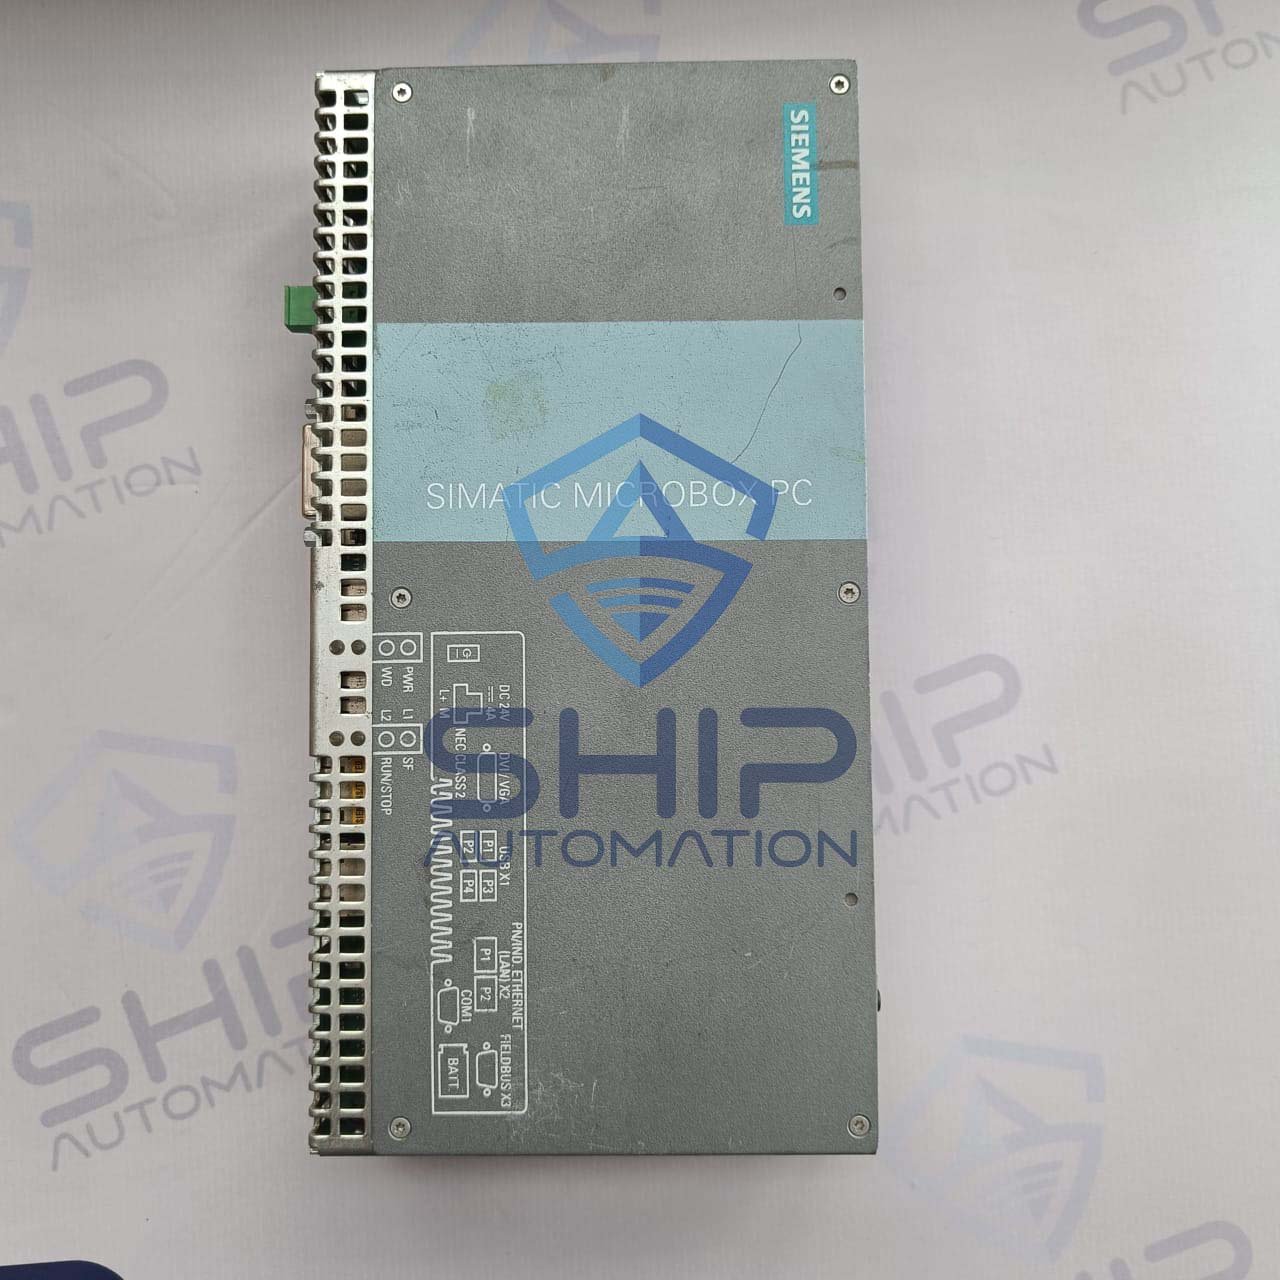 Siemens 6ES7 647-7BE30-4DB0 | Microbox PC